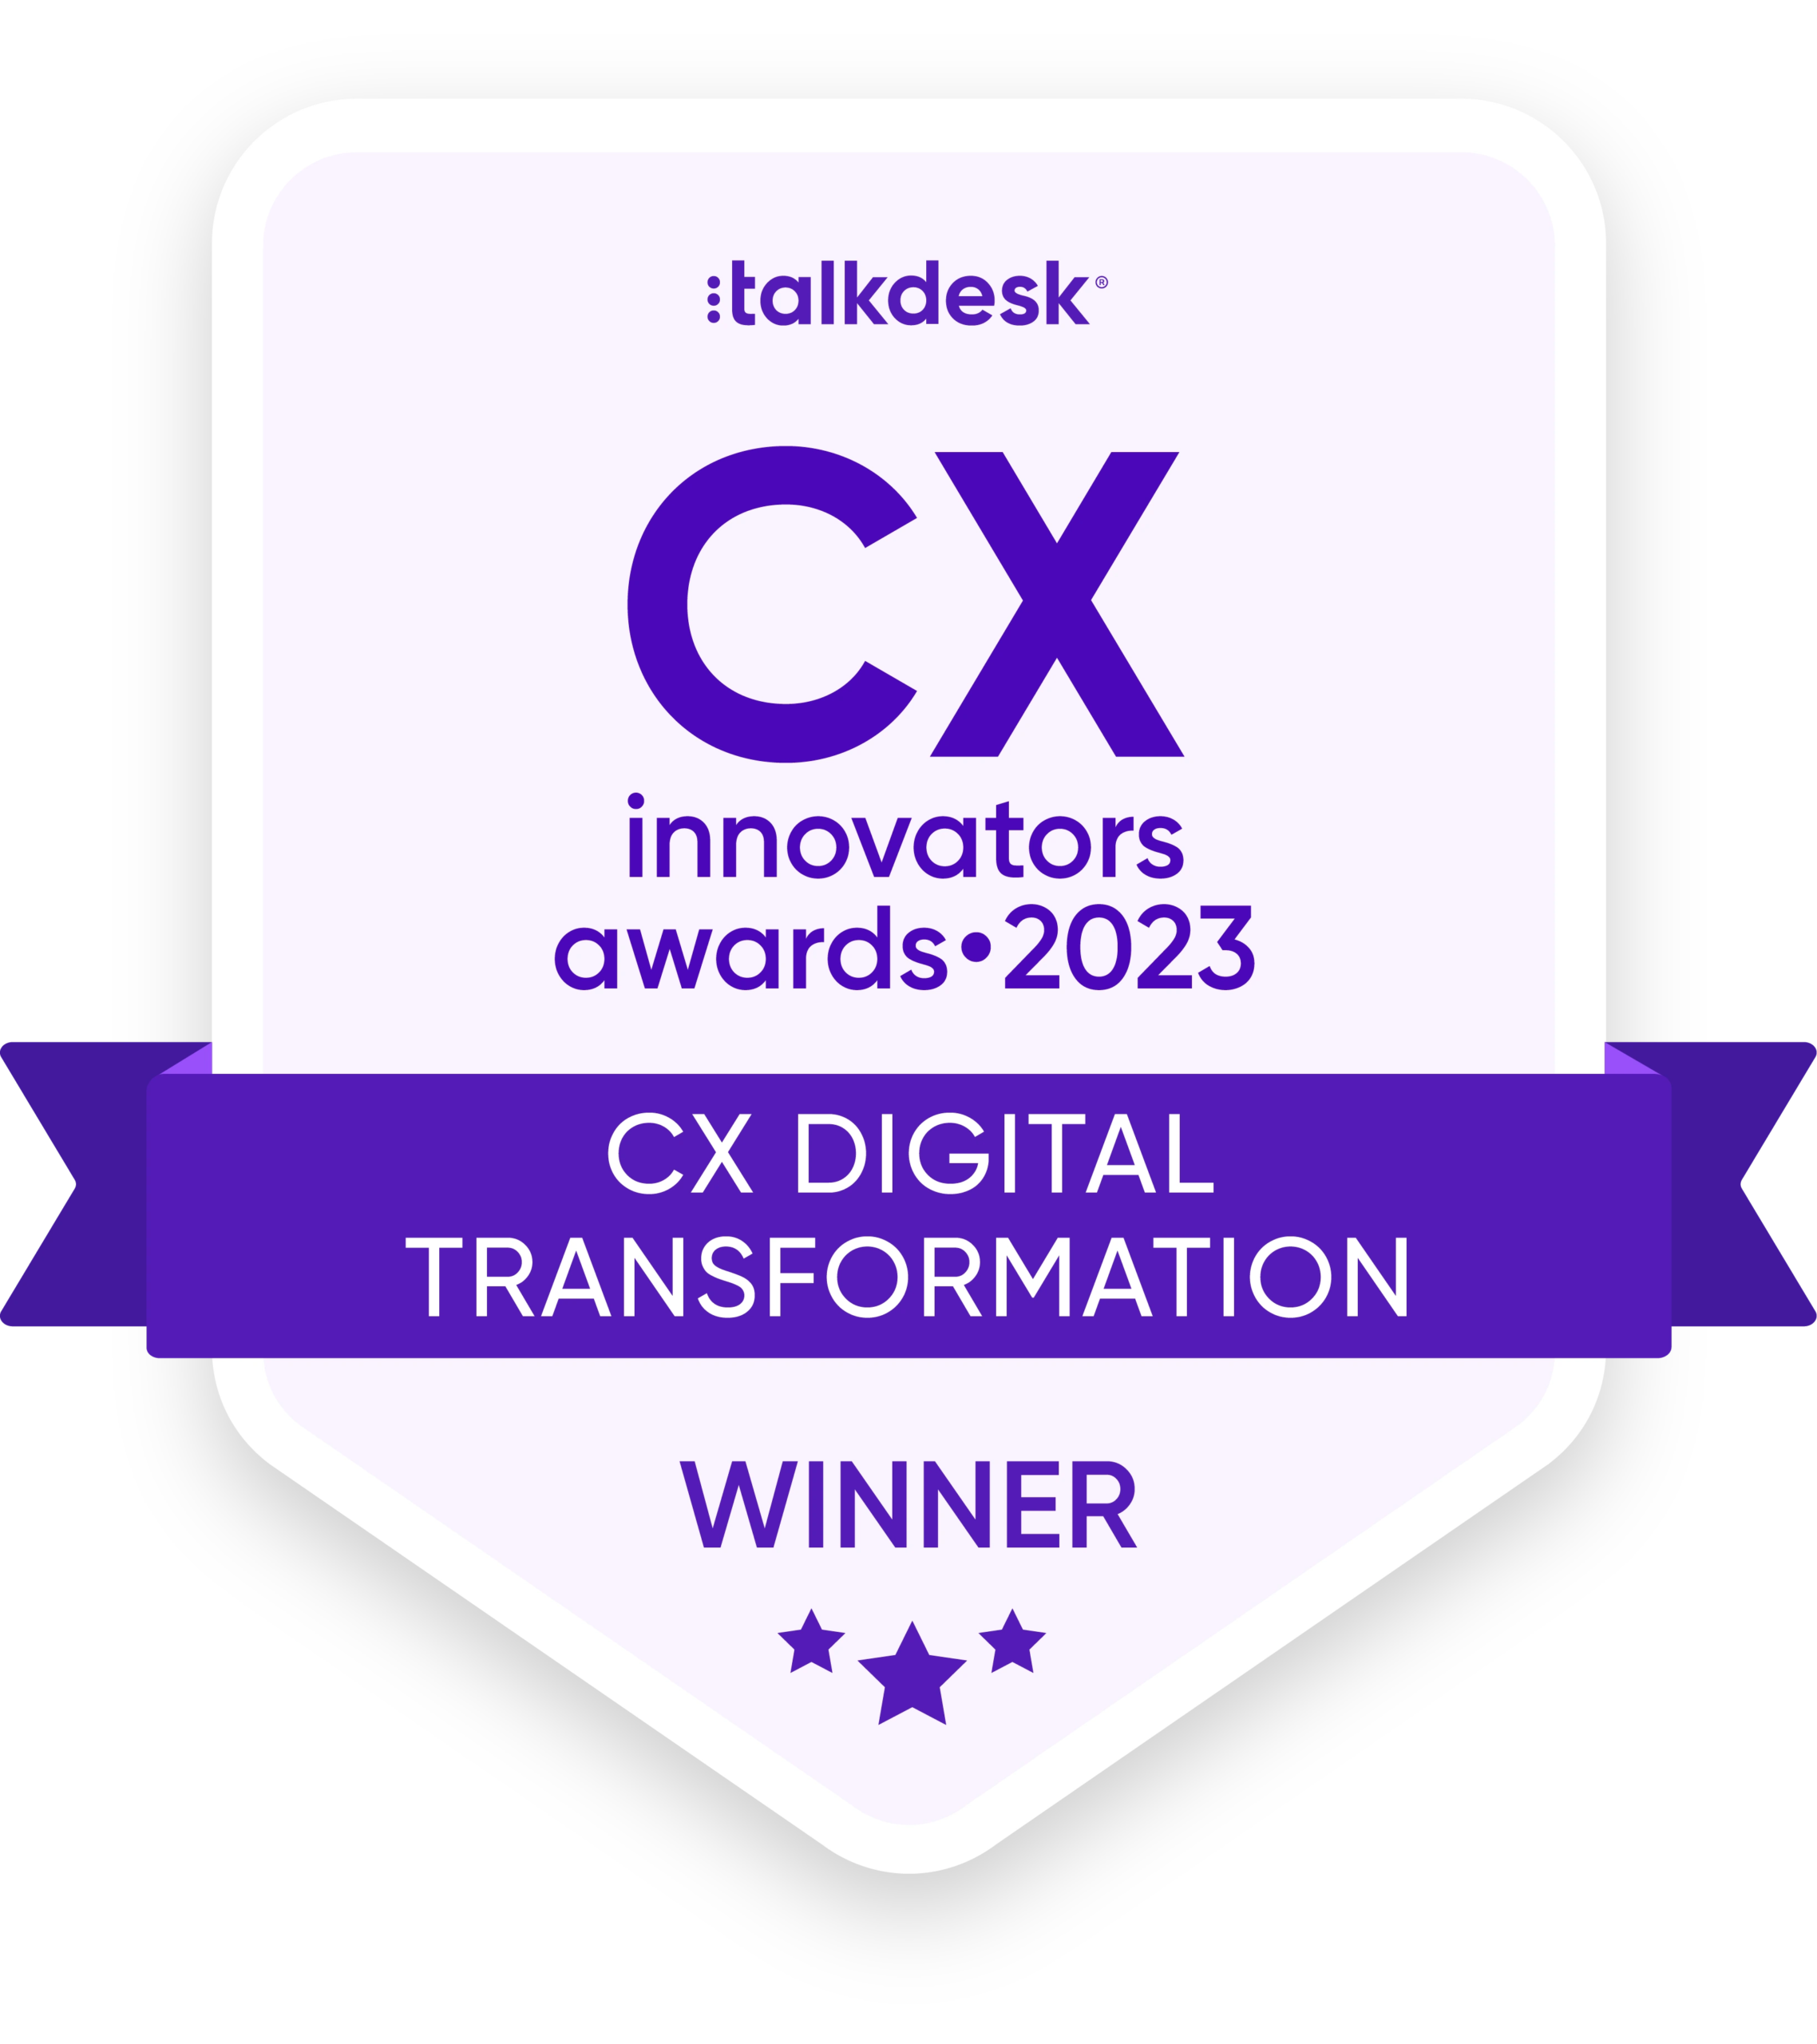 CX Digital Transformation Award 2023